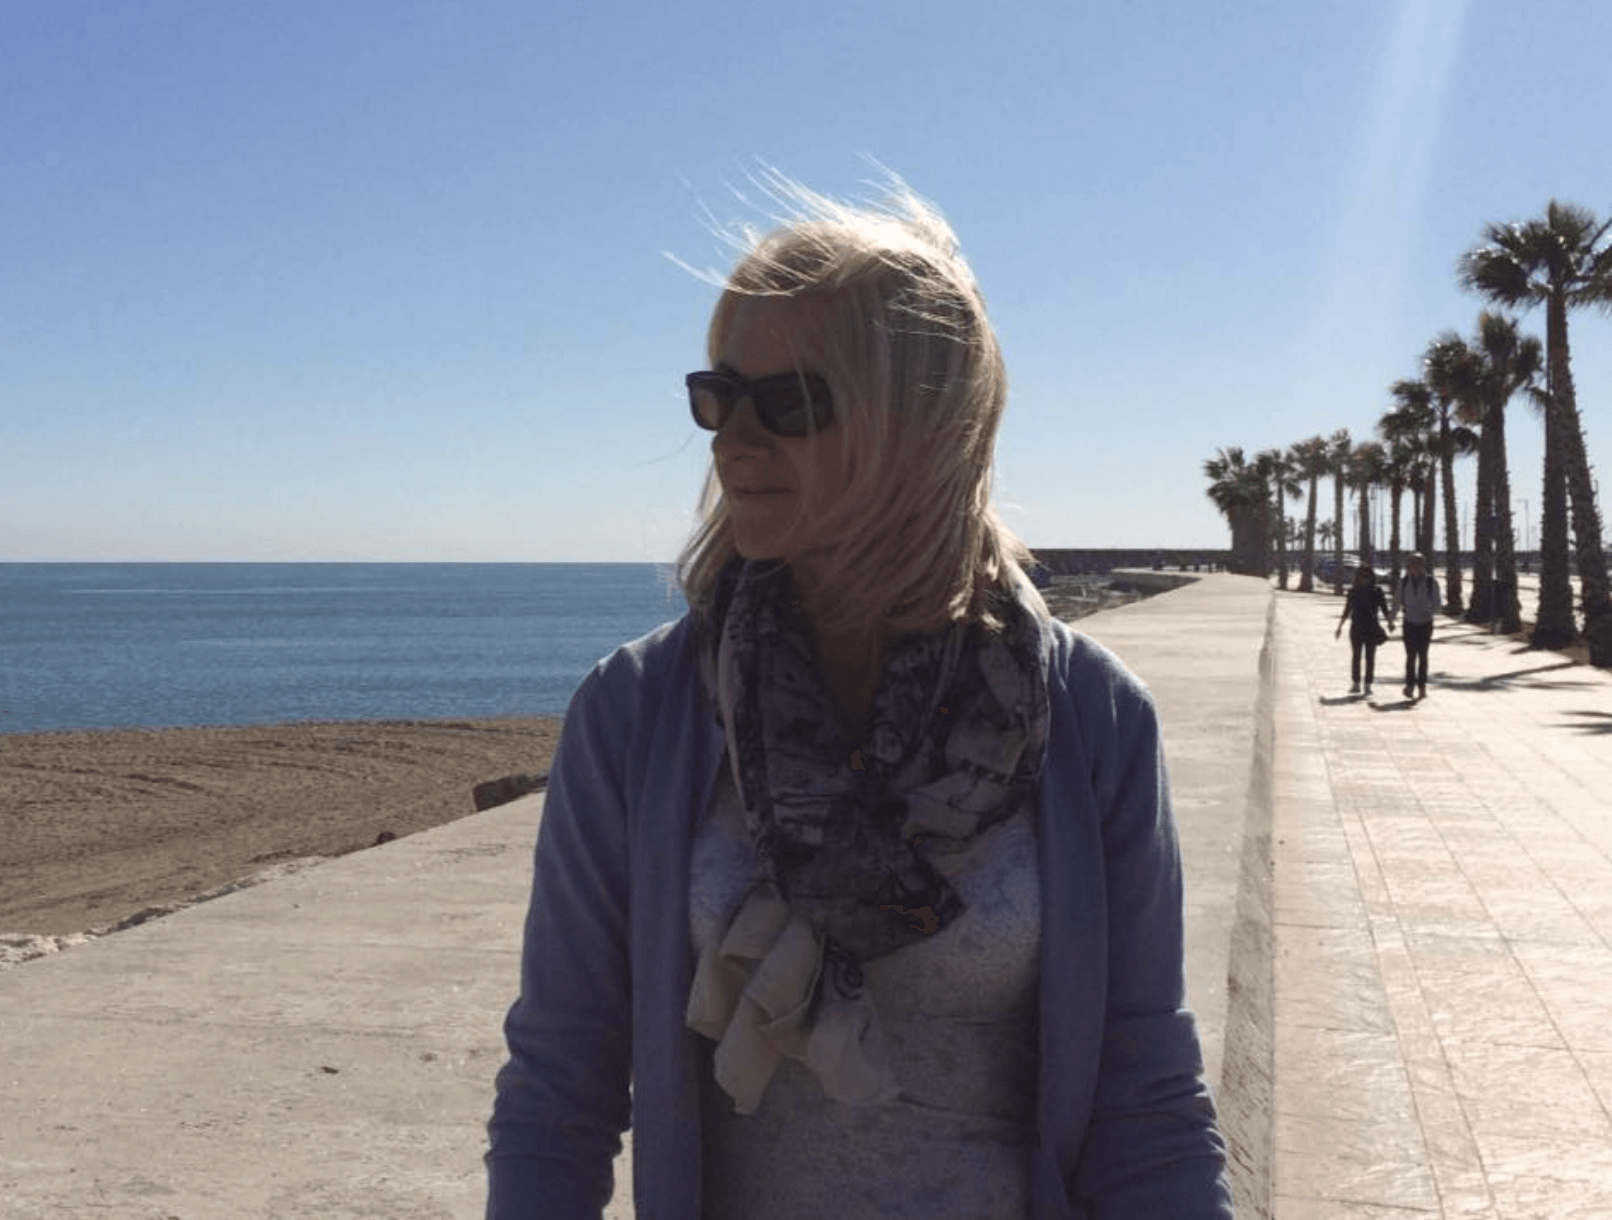 A woman wearing sunglasses stands on a sidewalk near the ocean